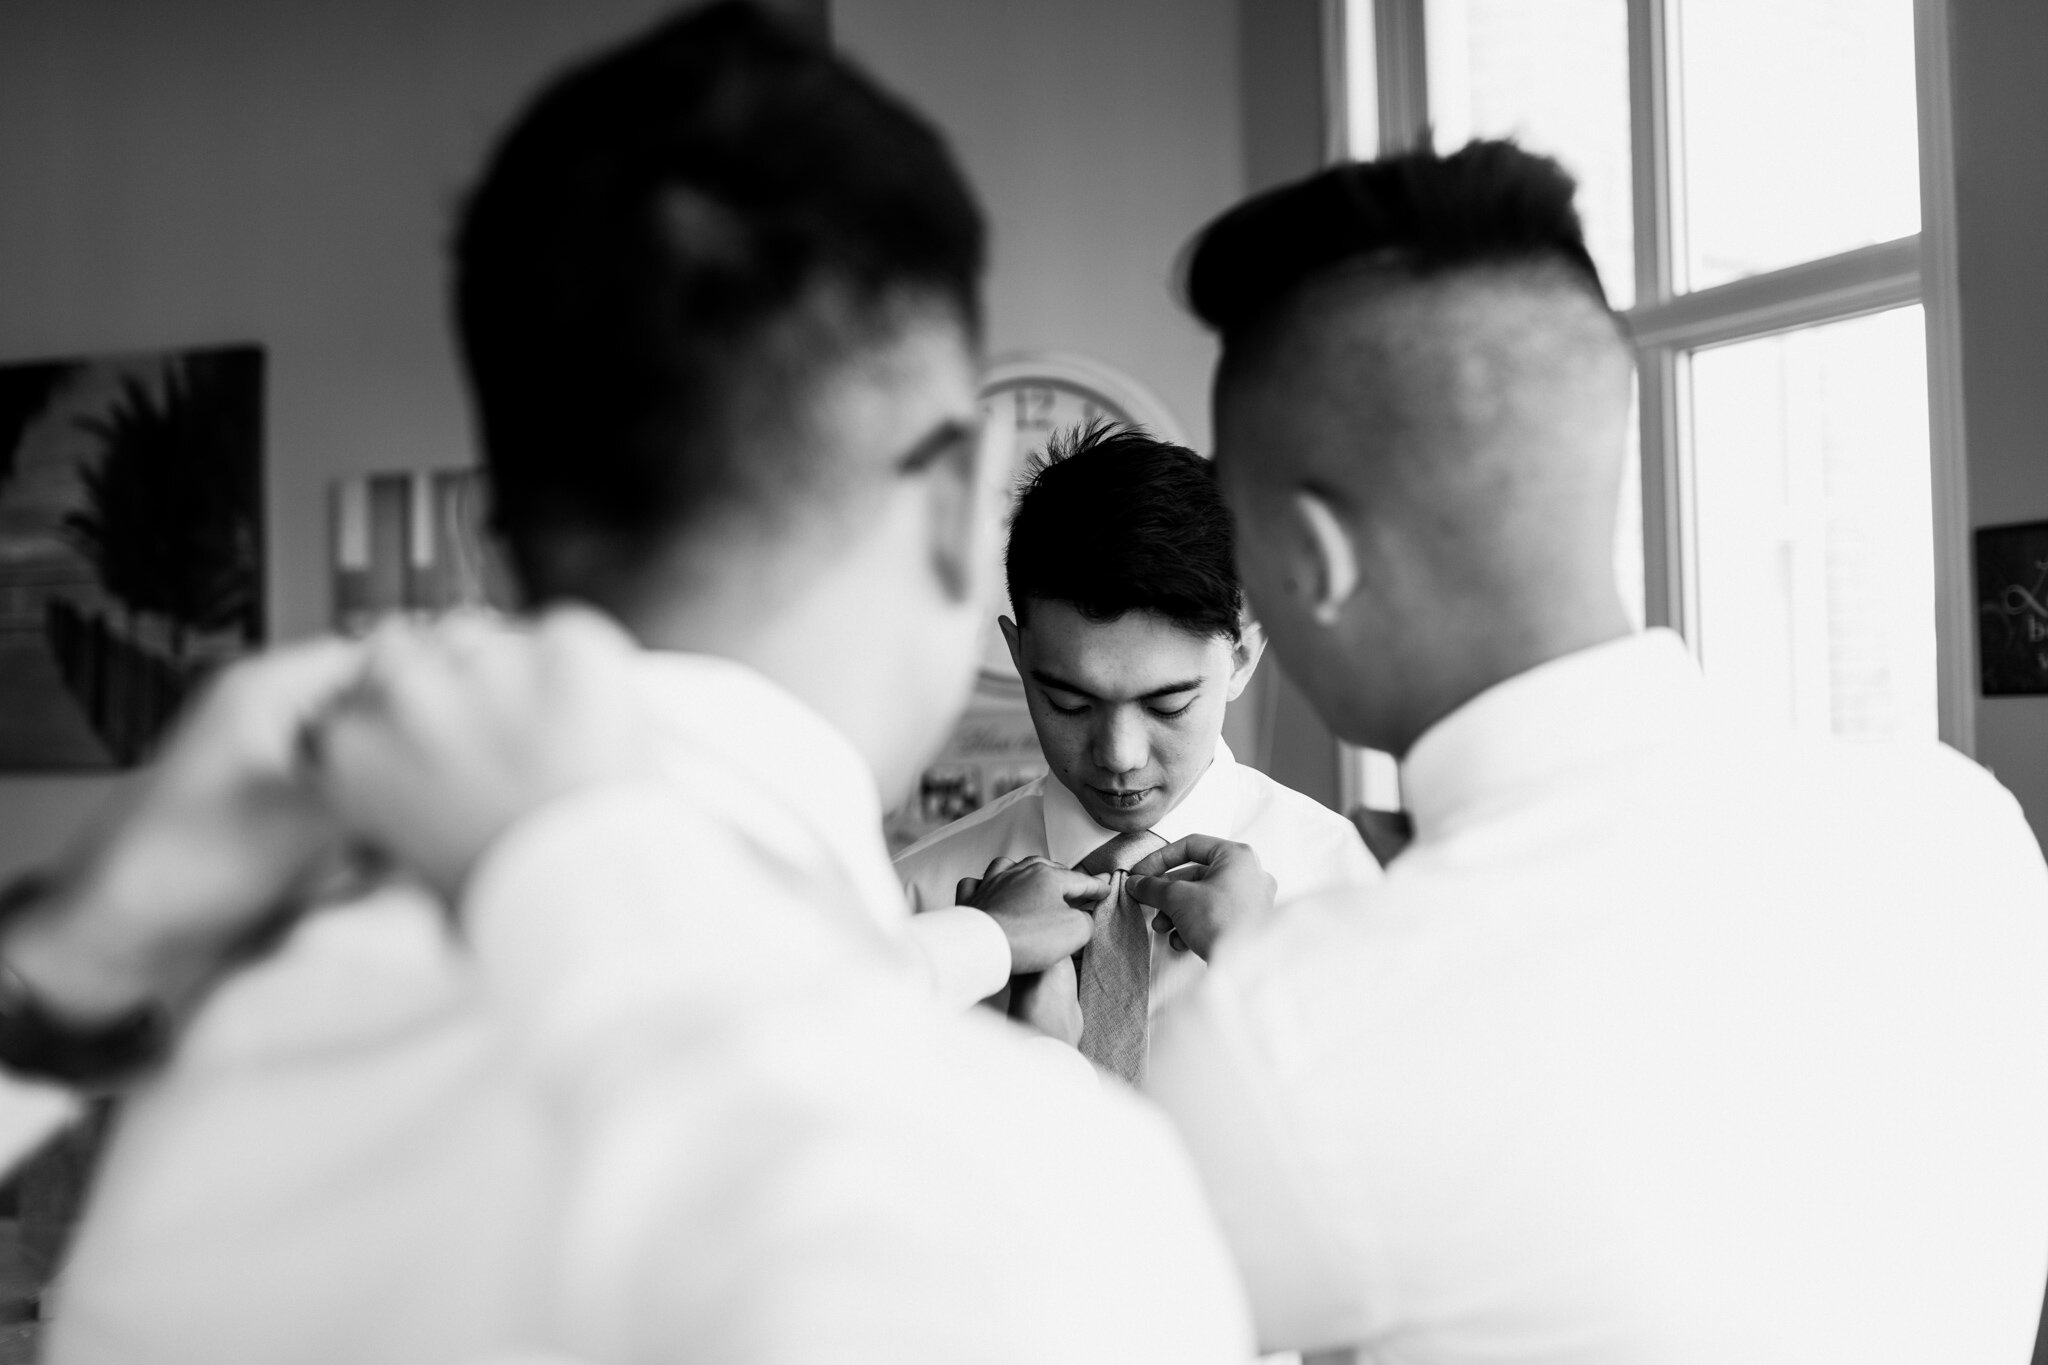 191-groom-getting-ready-photos-toronto-brewery-wedding-photos-steamwhistle.jpg